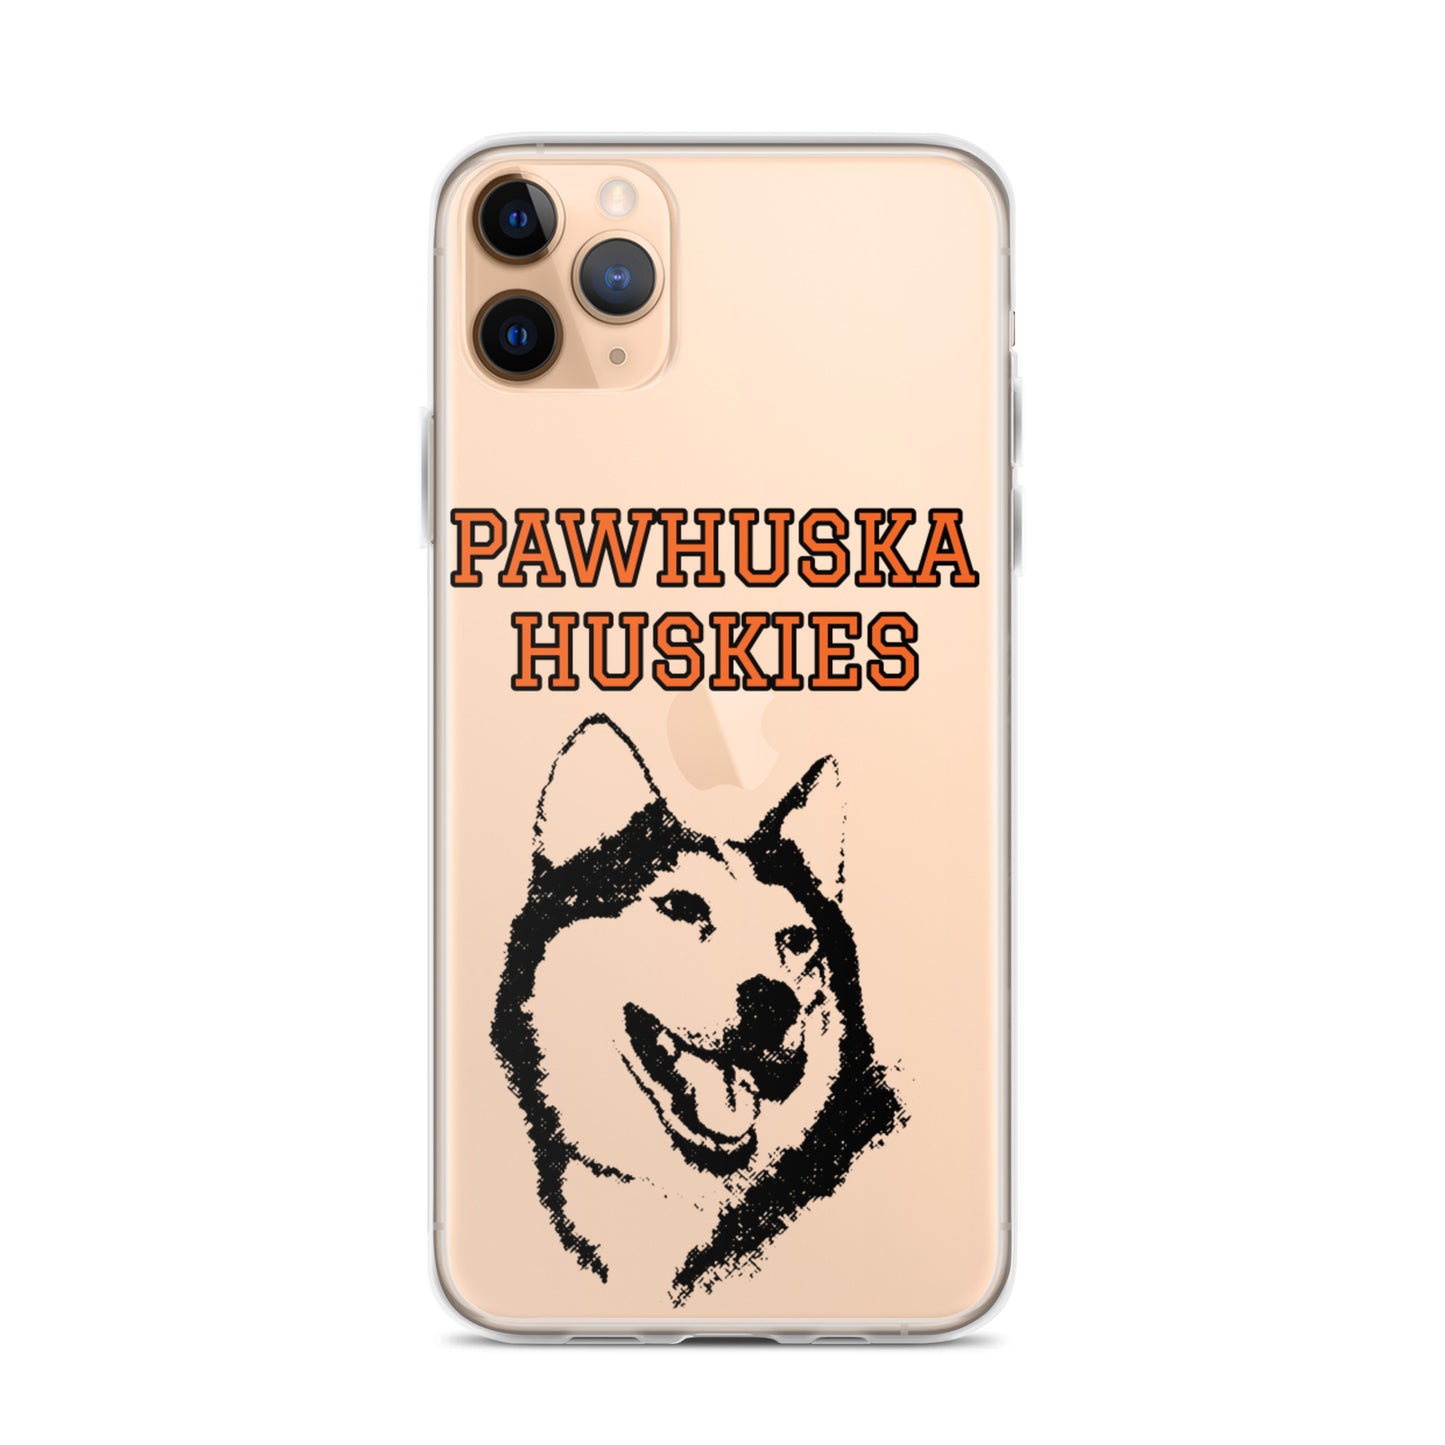 Huskies iPhone Case